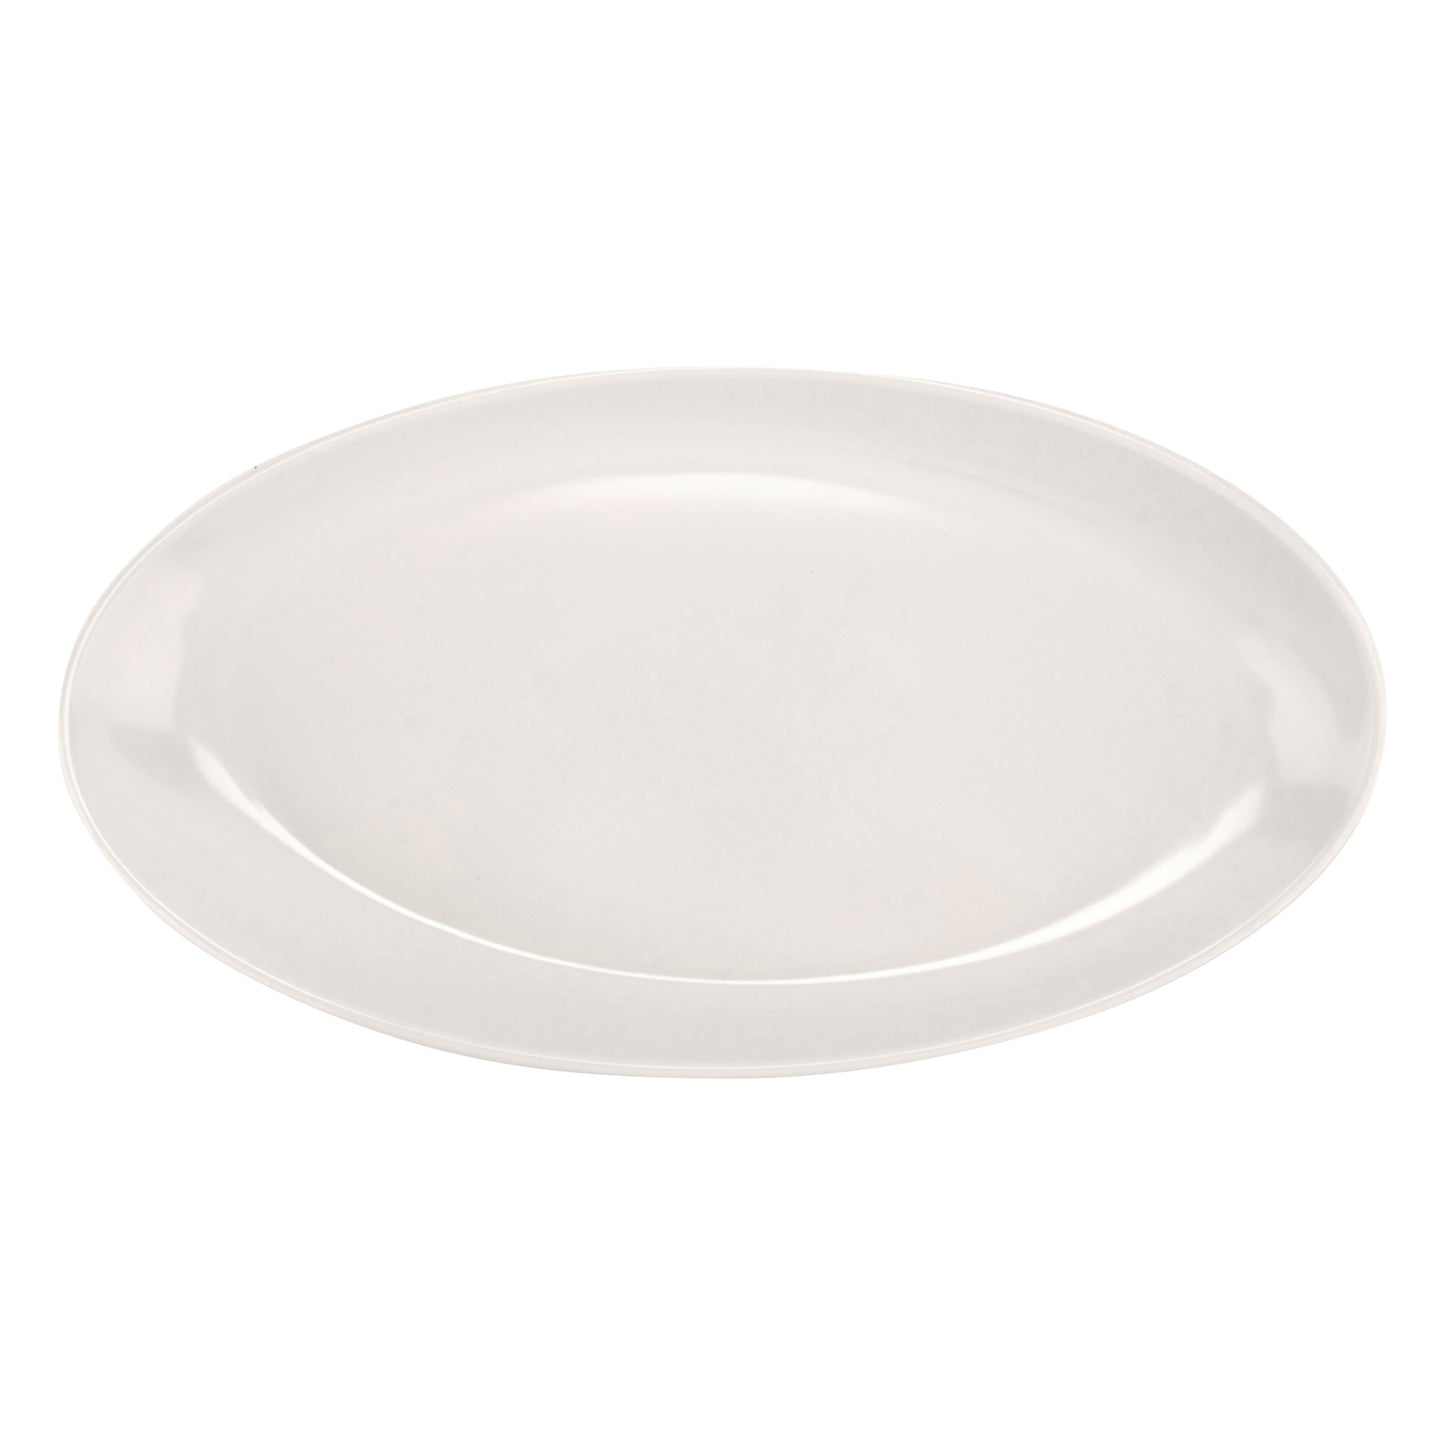 15" x 8" Oval Platter